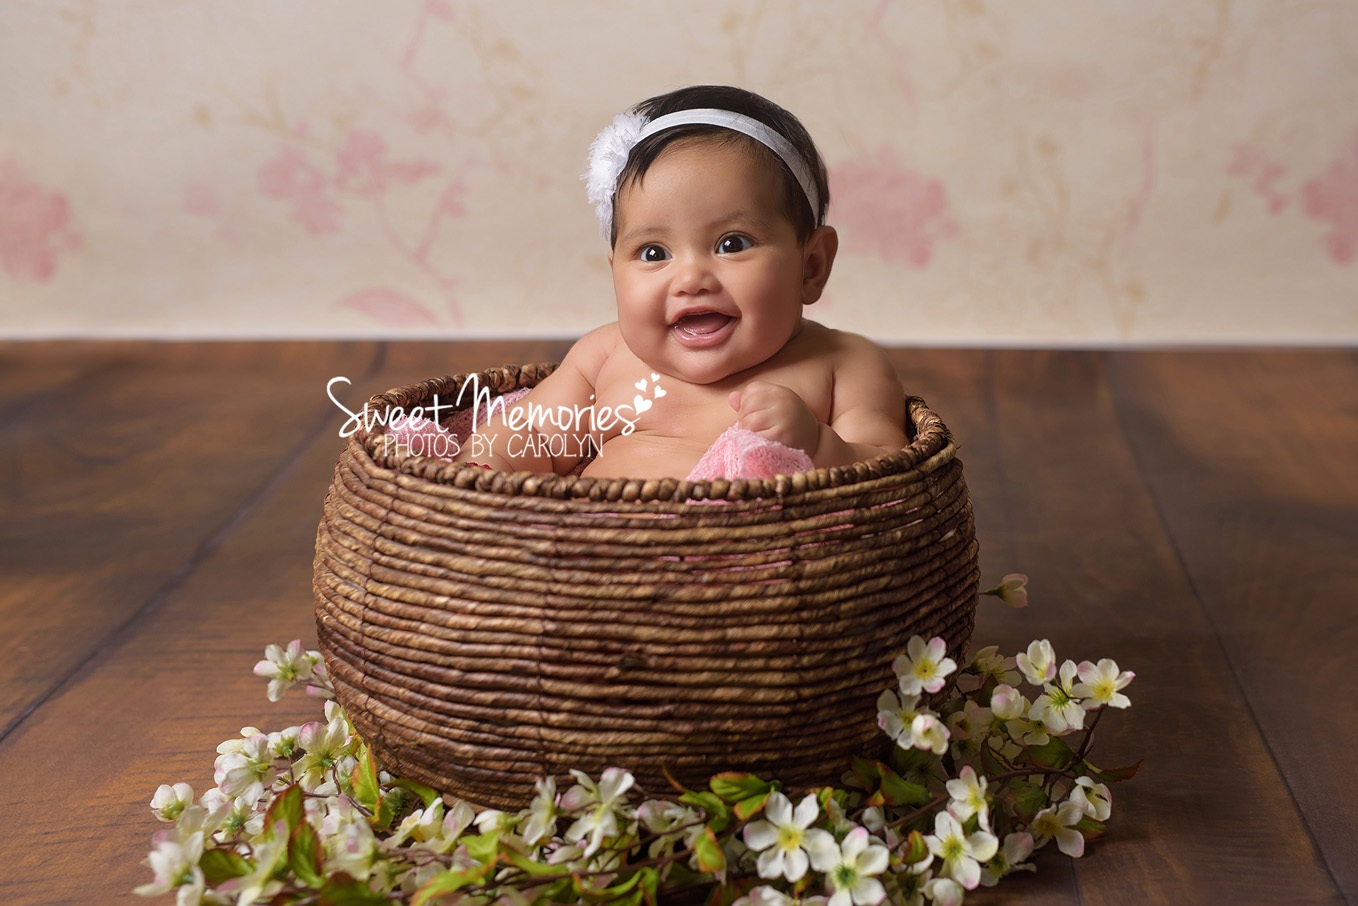 baby girl in basket